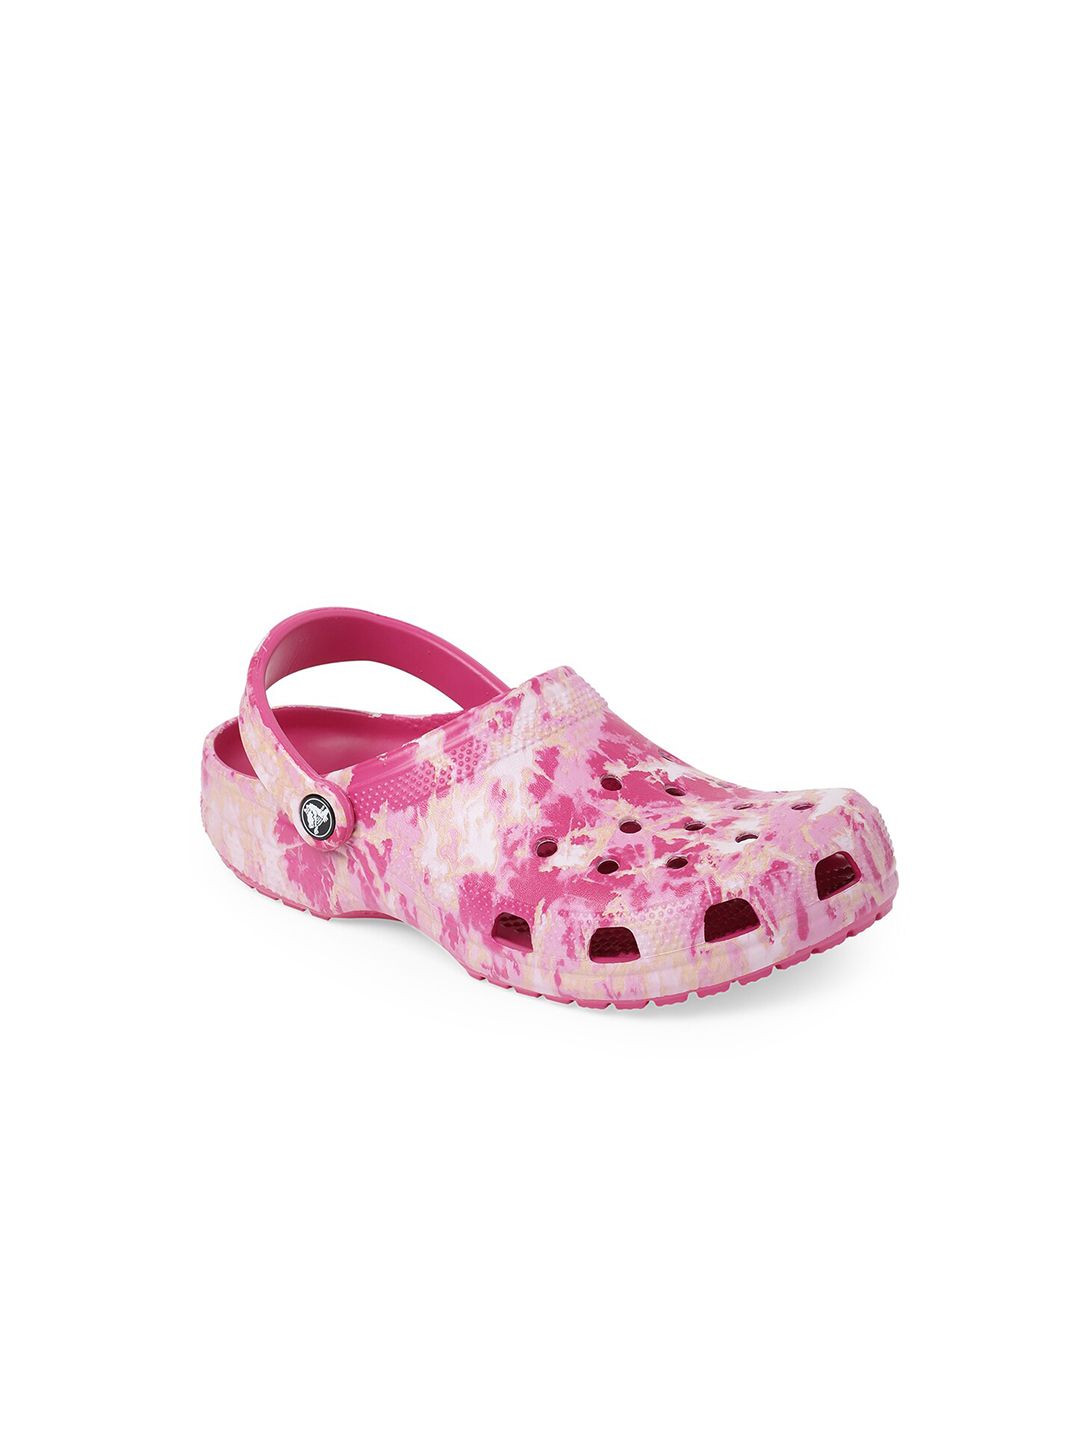 Crocs Unisex Pink & Beige Classic Printed Clogs Price in India